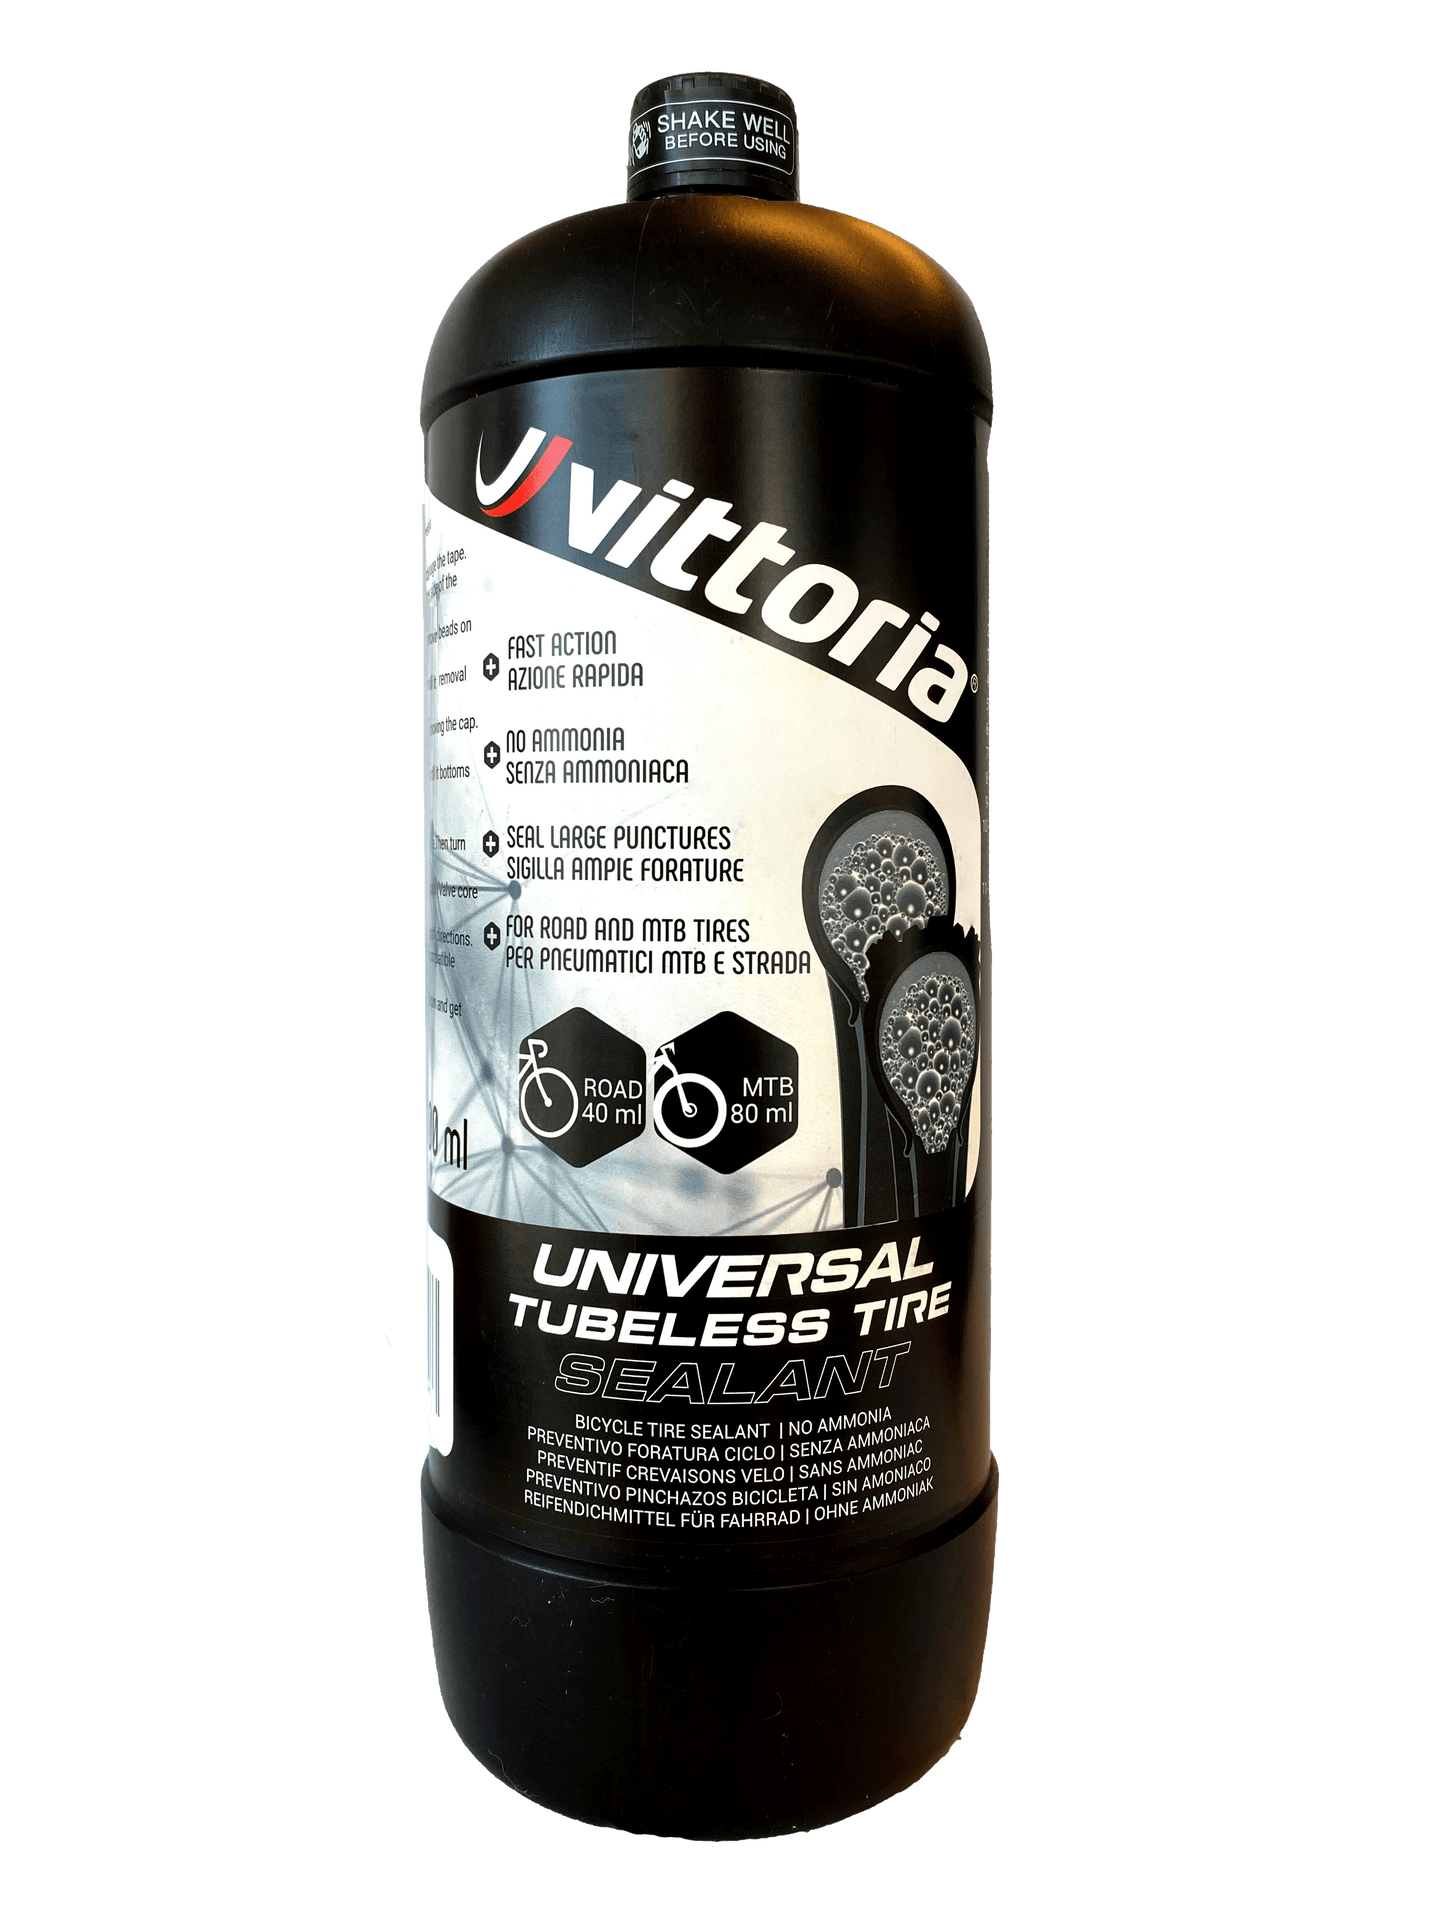 VITTORIA ULTIMATE tubeless tire anti-explosion fluid/VITTORIA ULTIMATE TUBELESS TIRE SEALANT